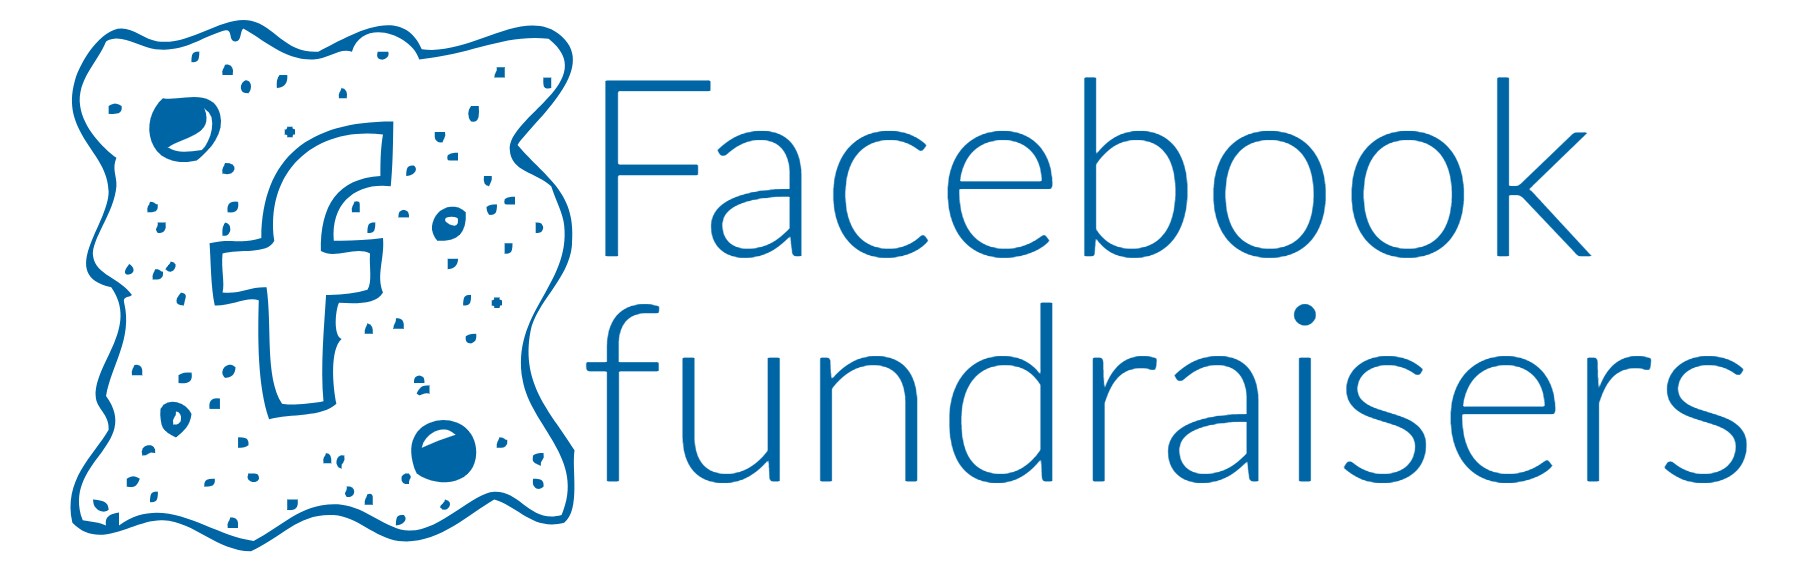 facebook_fundraisers.jpg